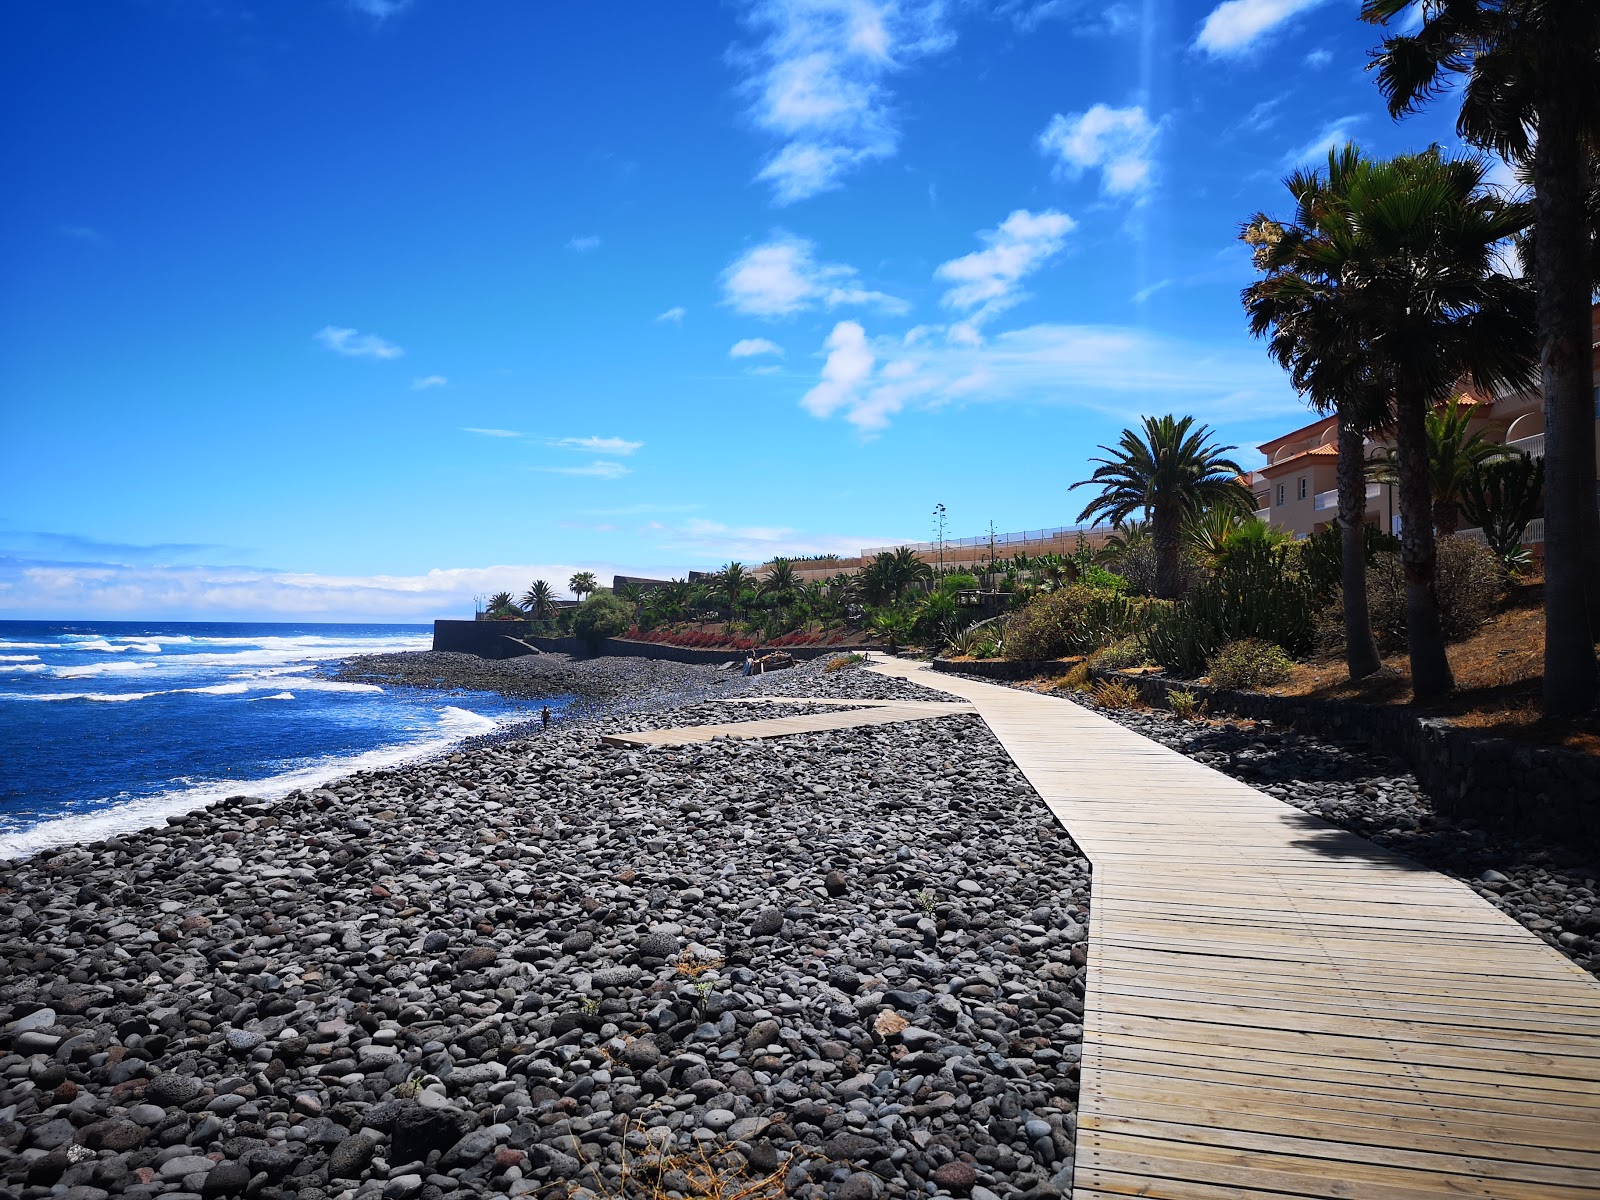 Photo of Playa de la Caleta with blue pure water surface